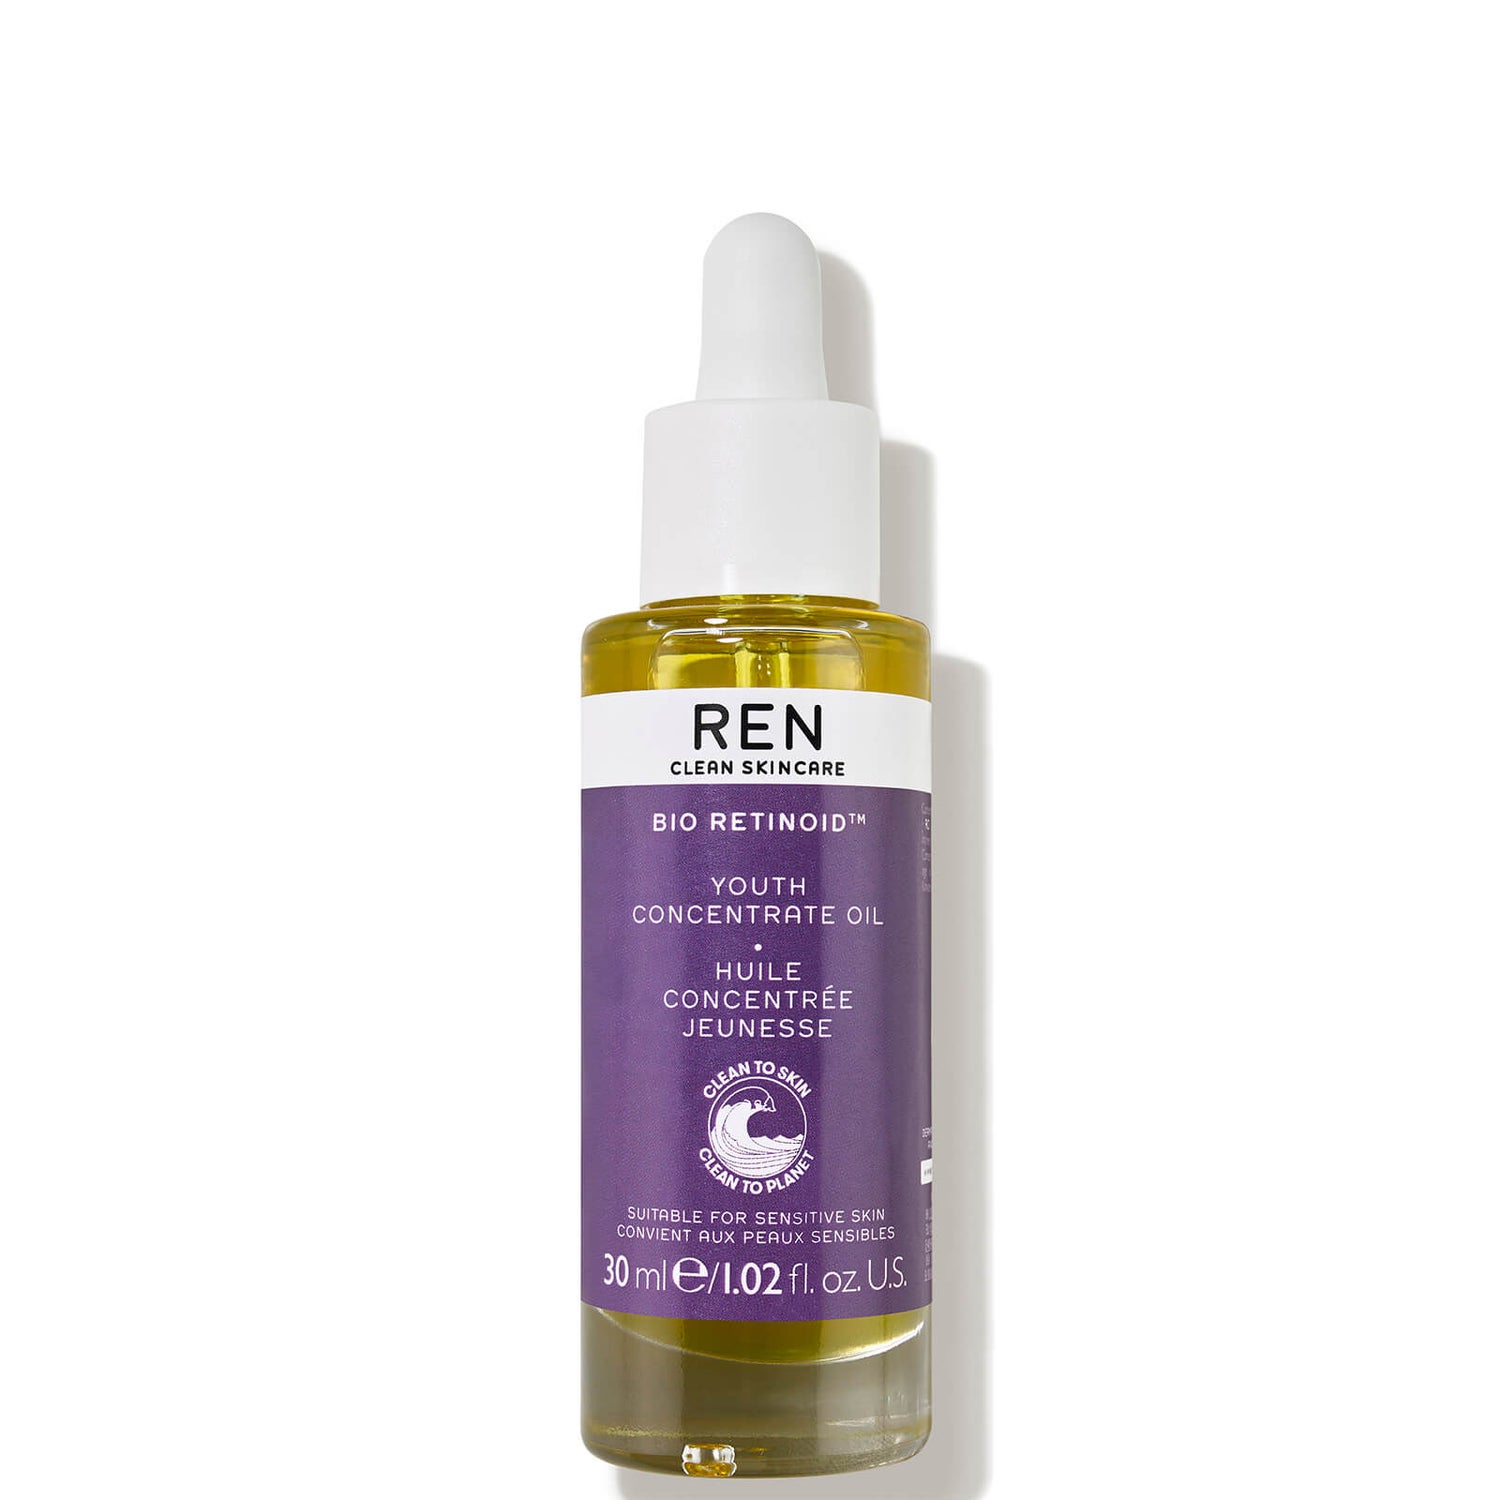 Huile concentrée jeunesse Bio Retinoid Clean Skincare REN 30 ml